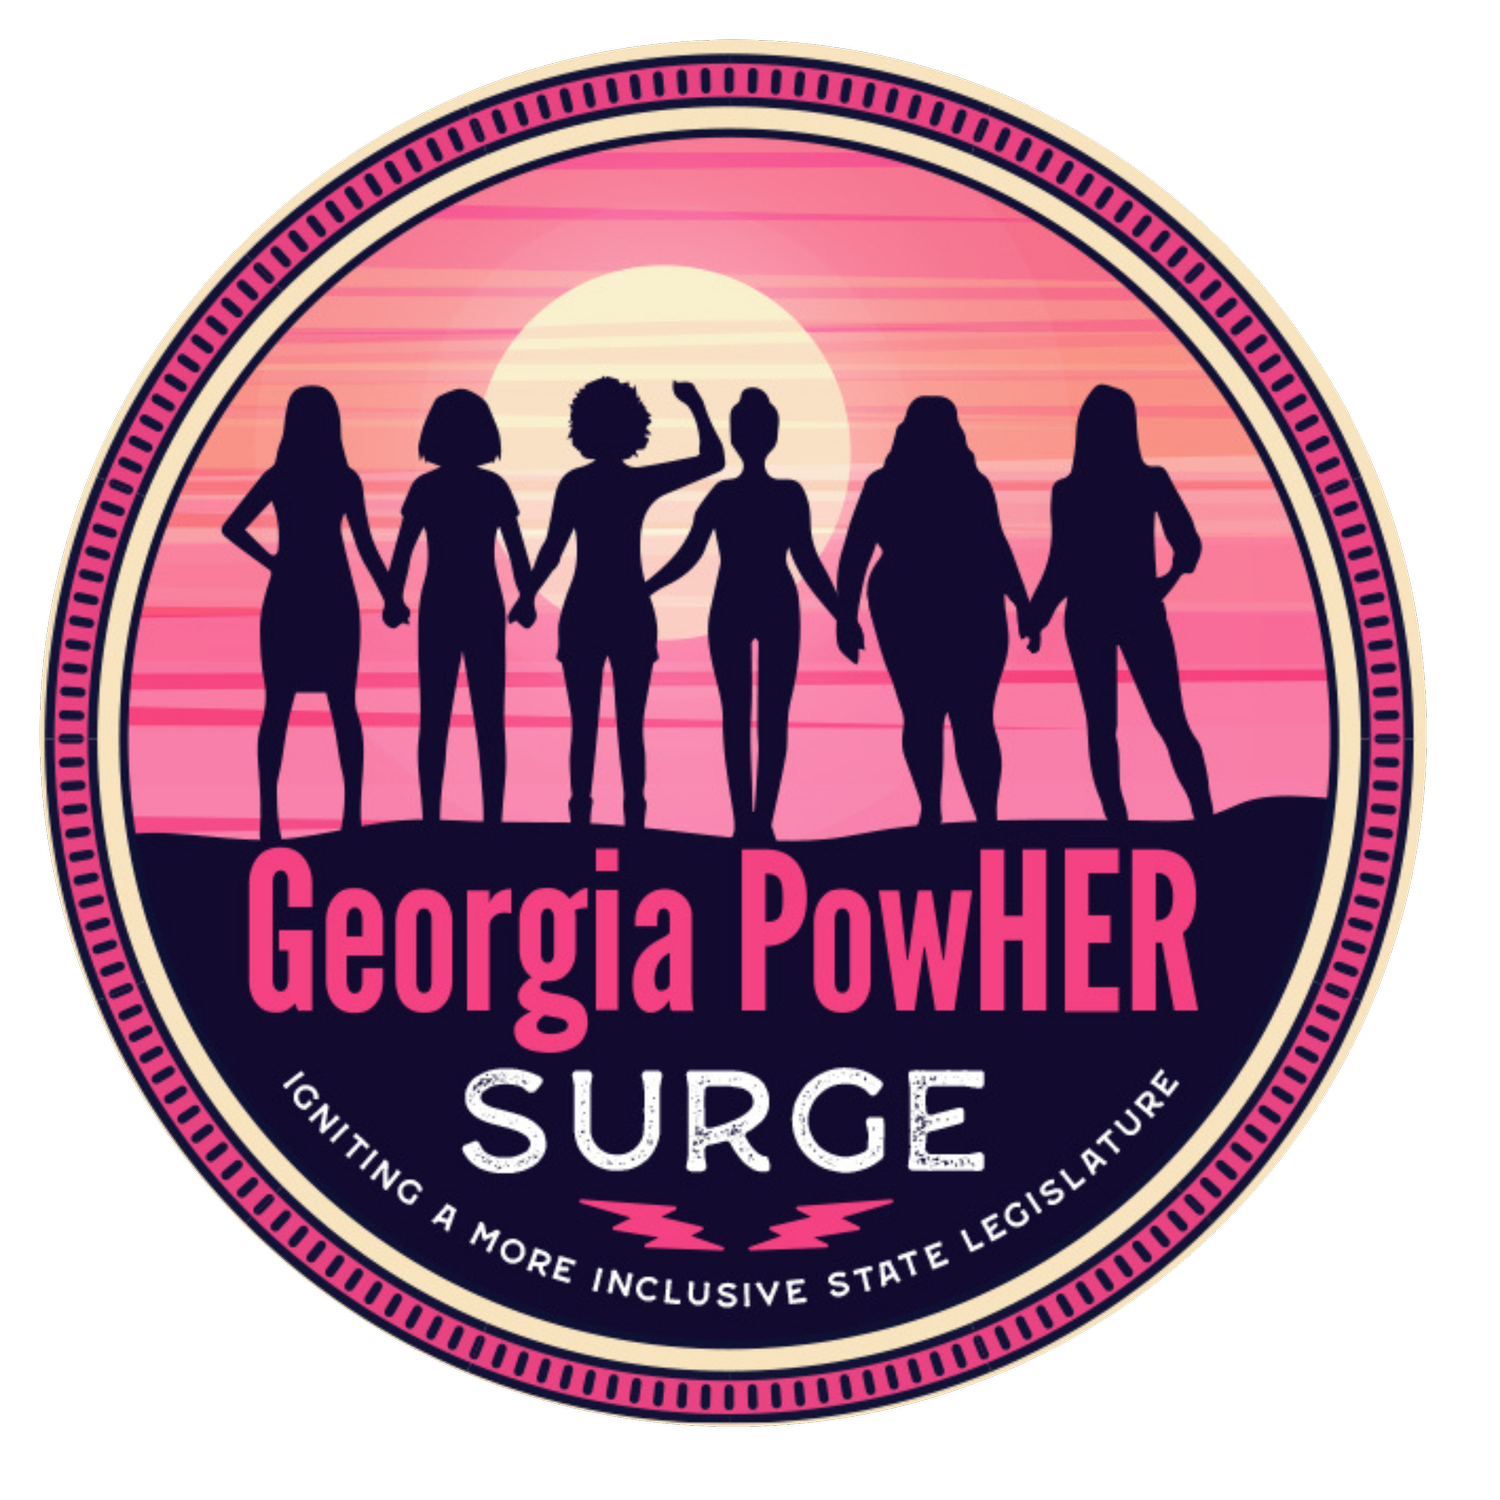 Georgia PowHER Surge